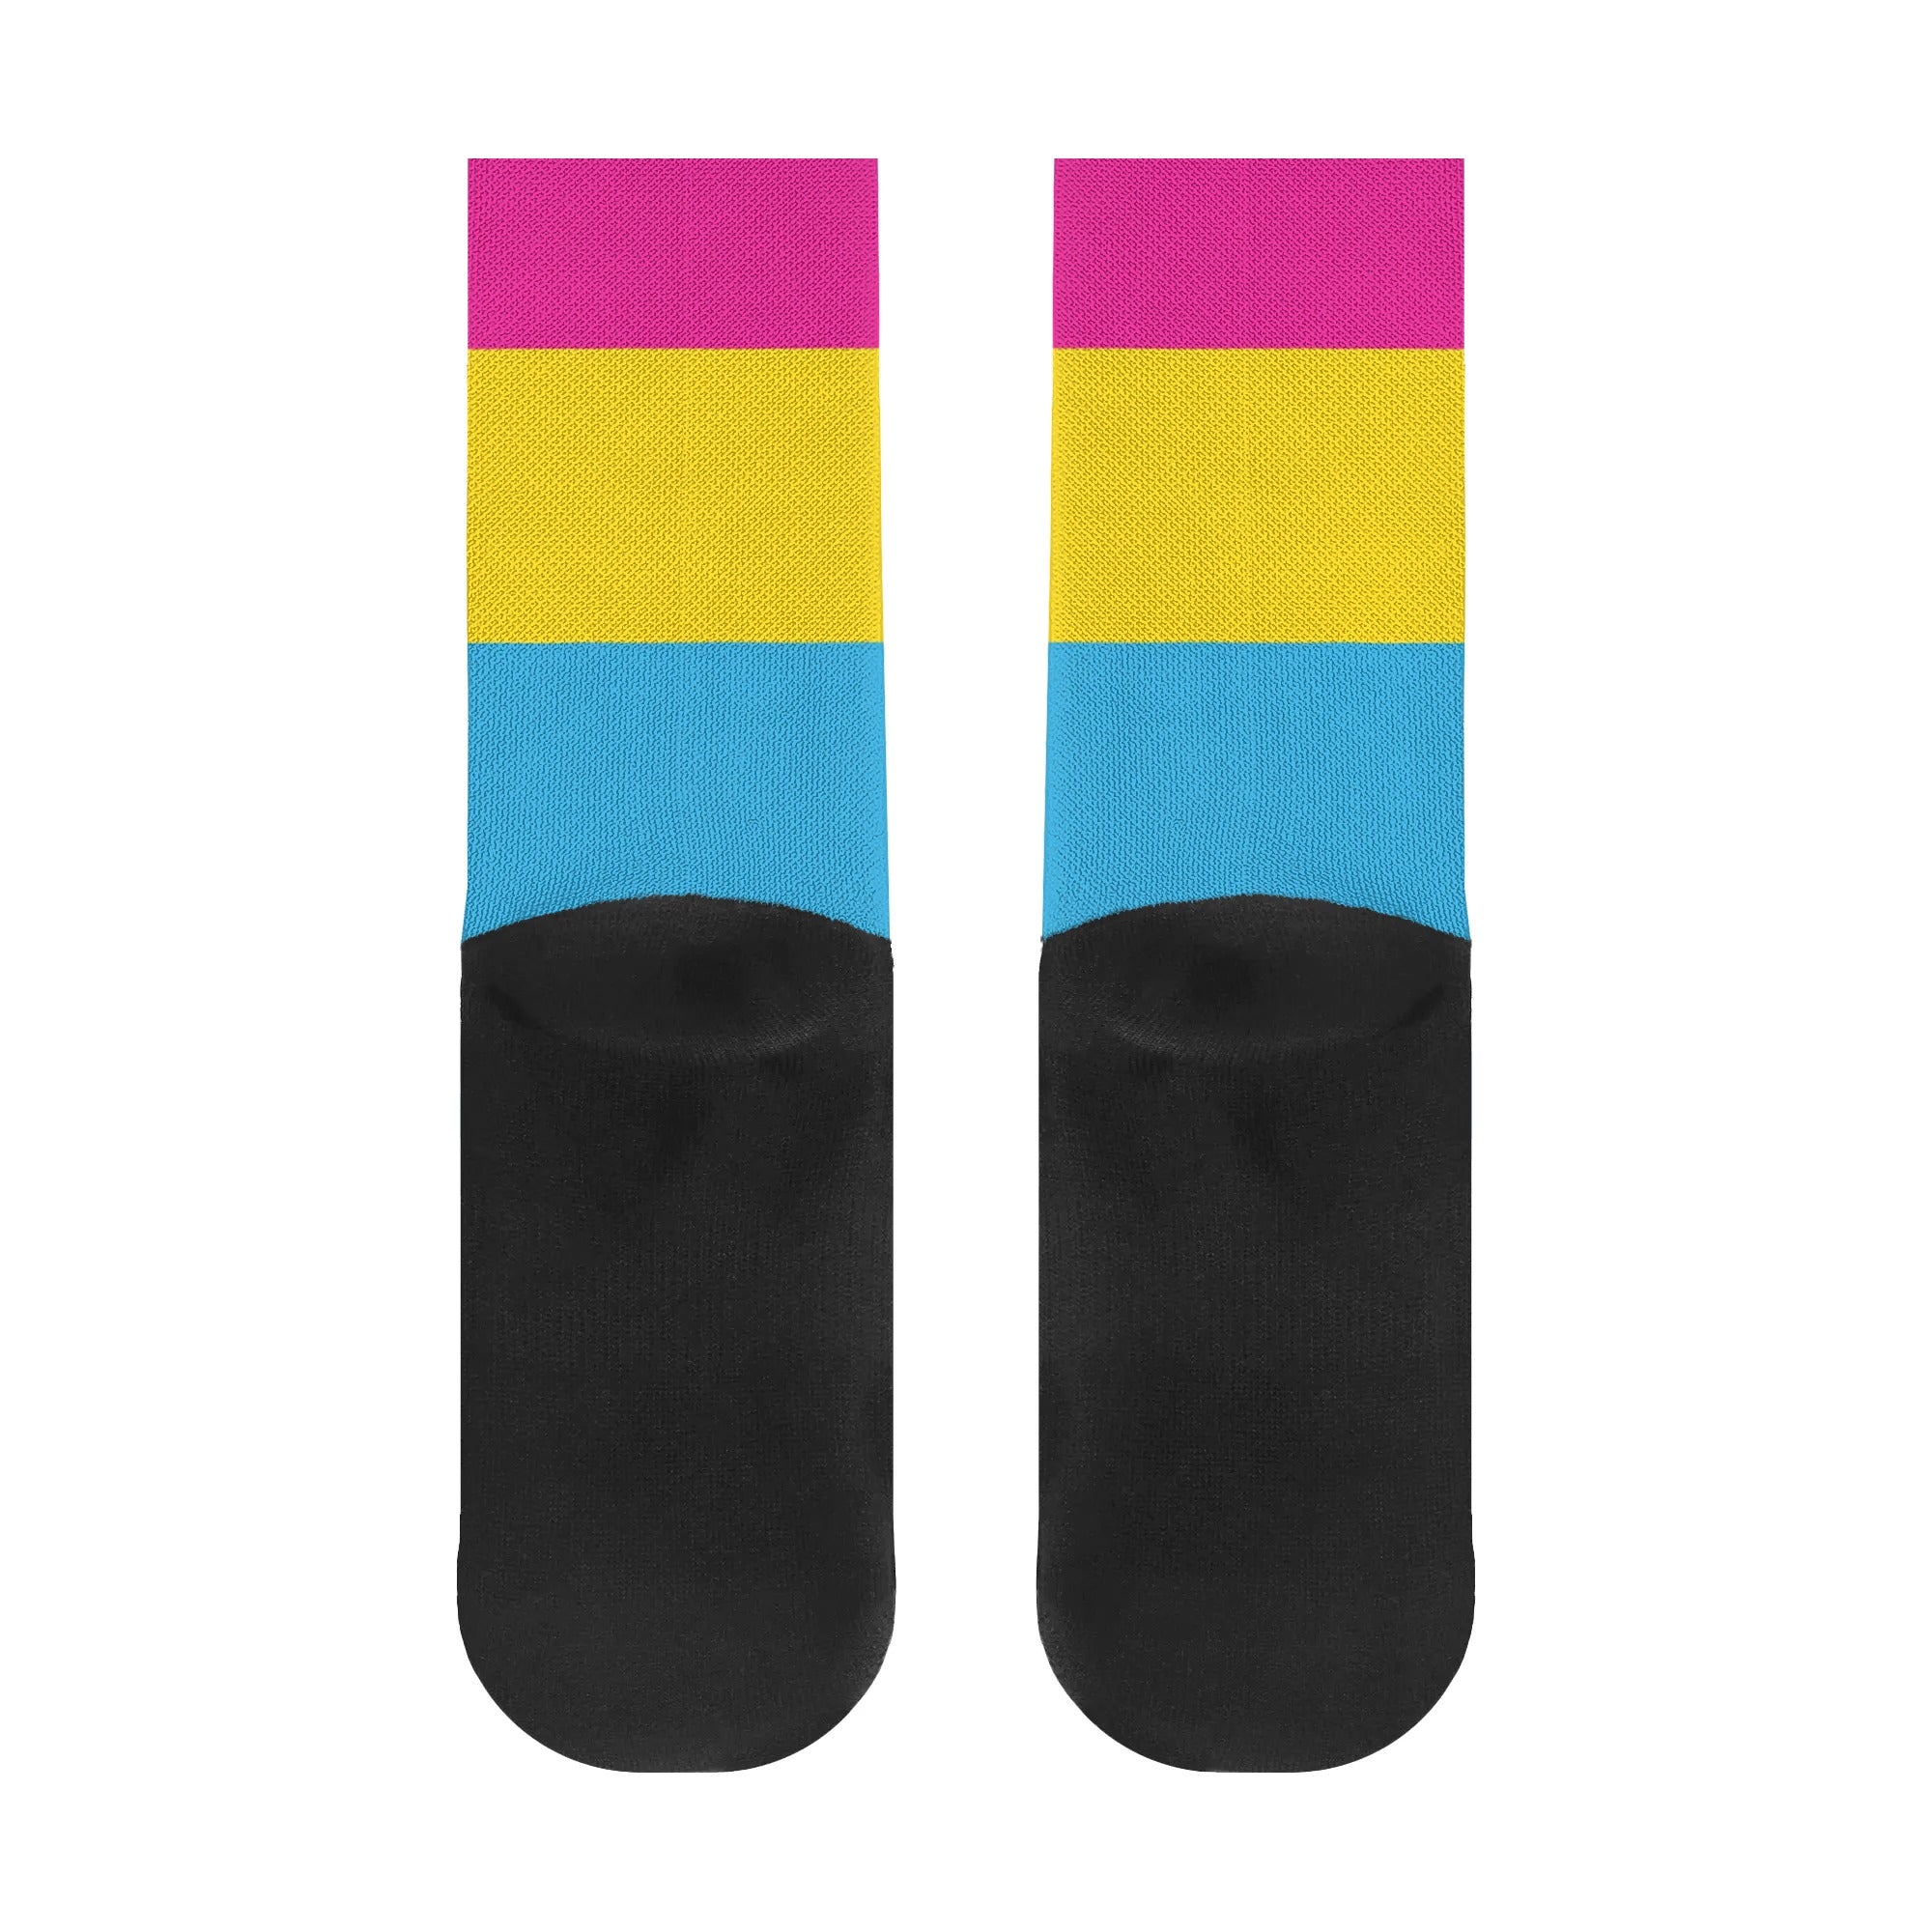 Pansexual Pride Crew Socks - Rose Gold Co. Shop